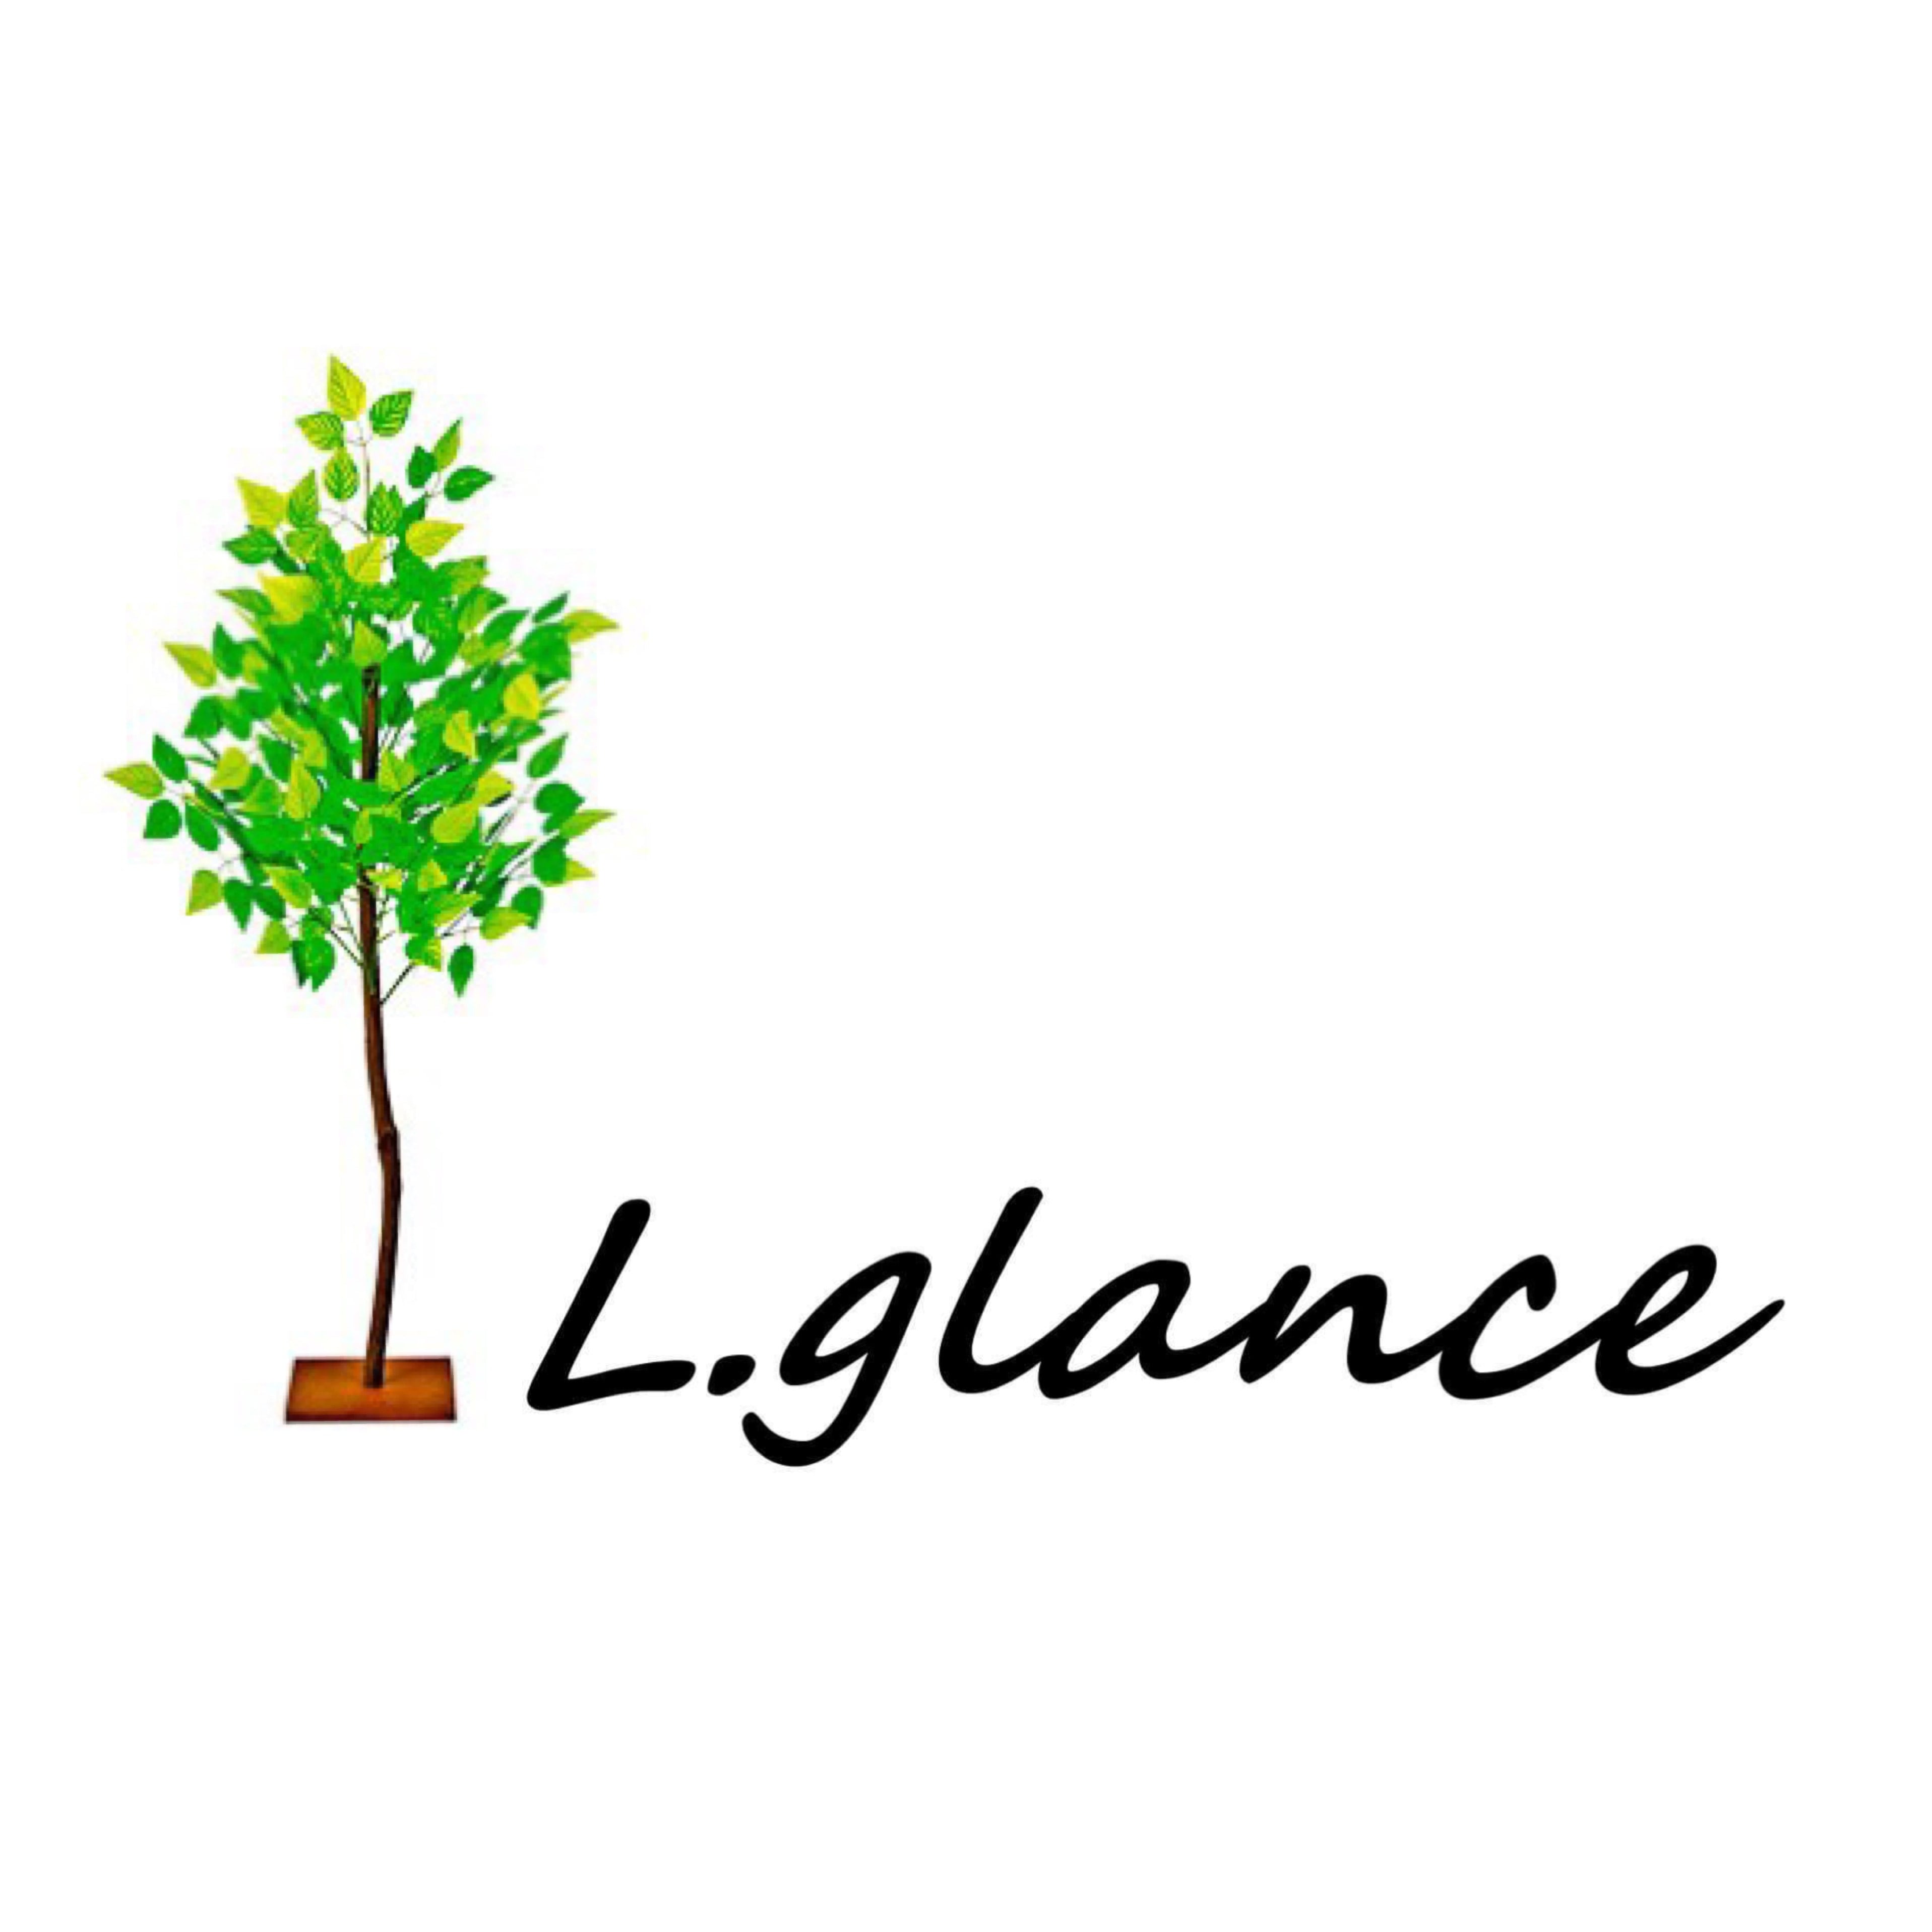 L.glance